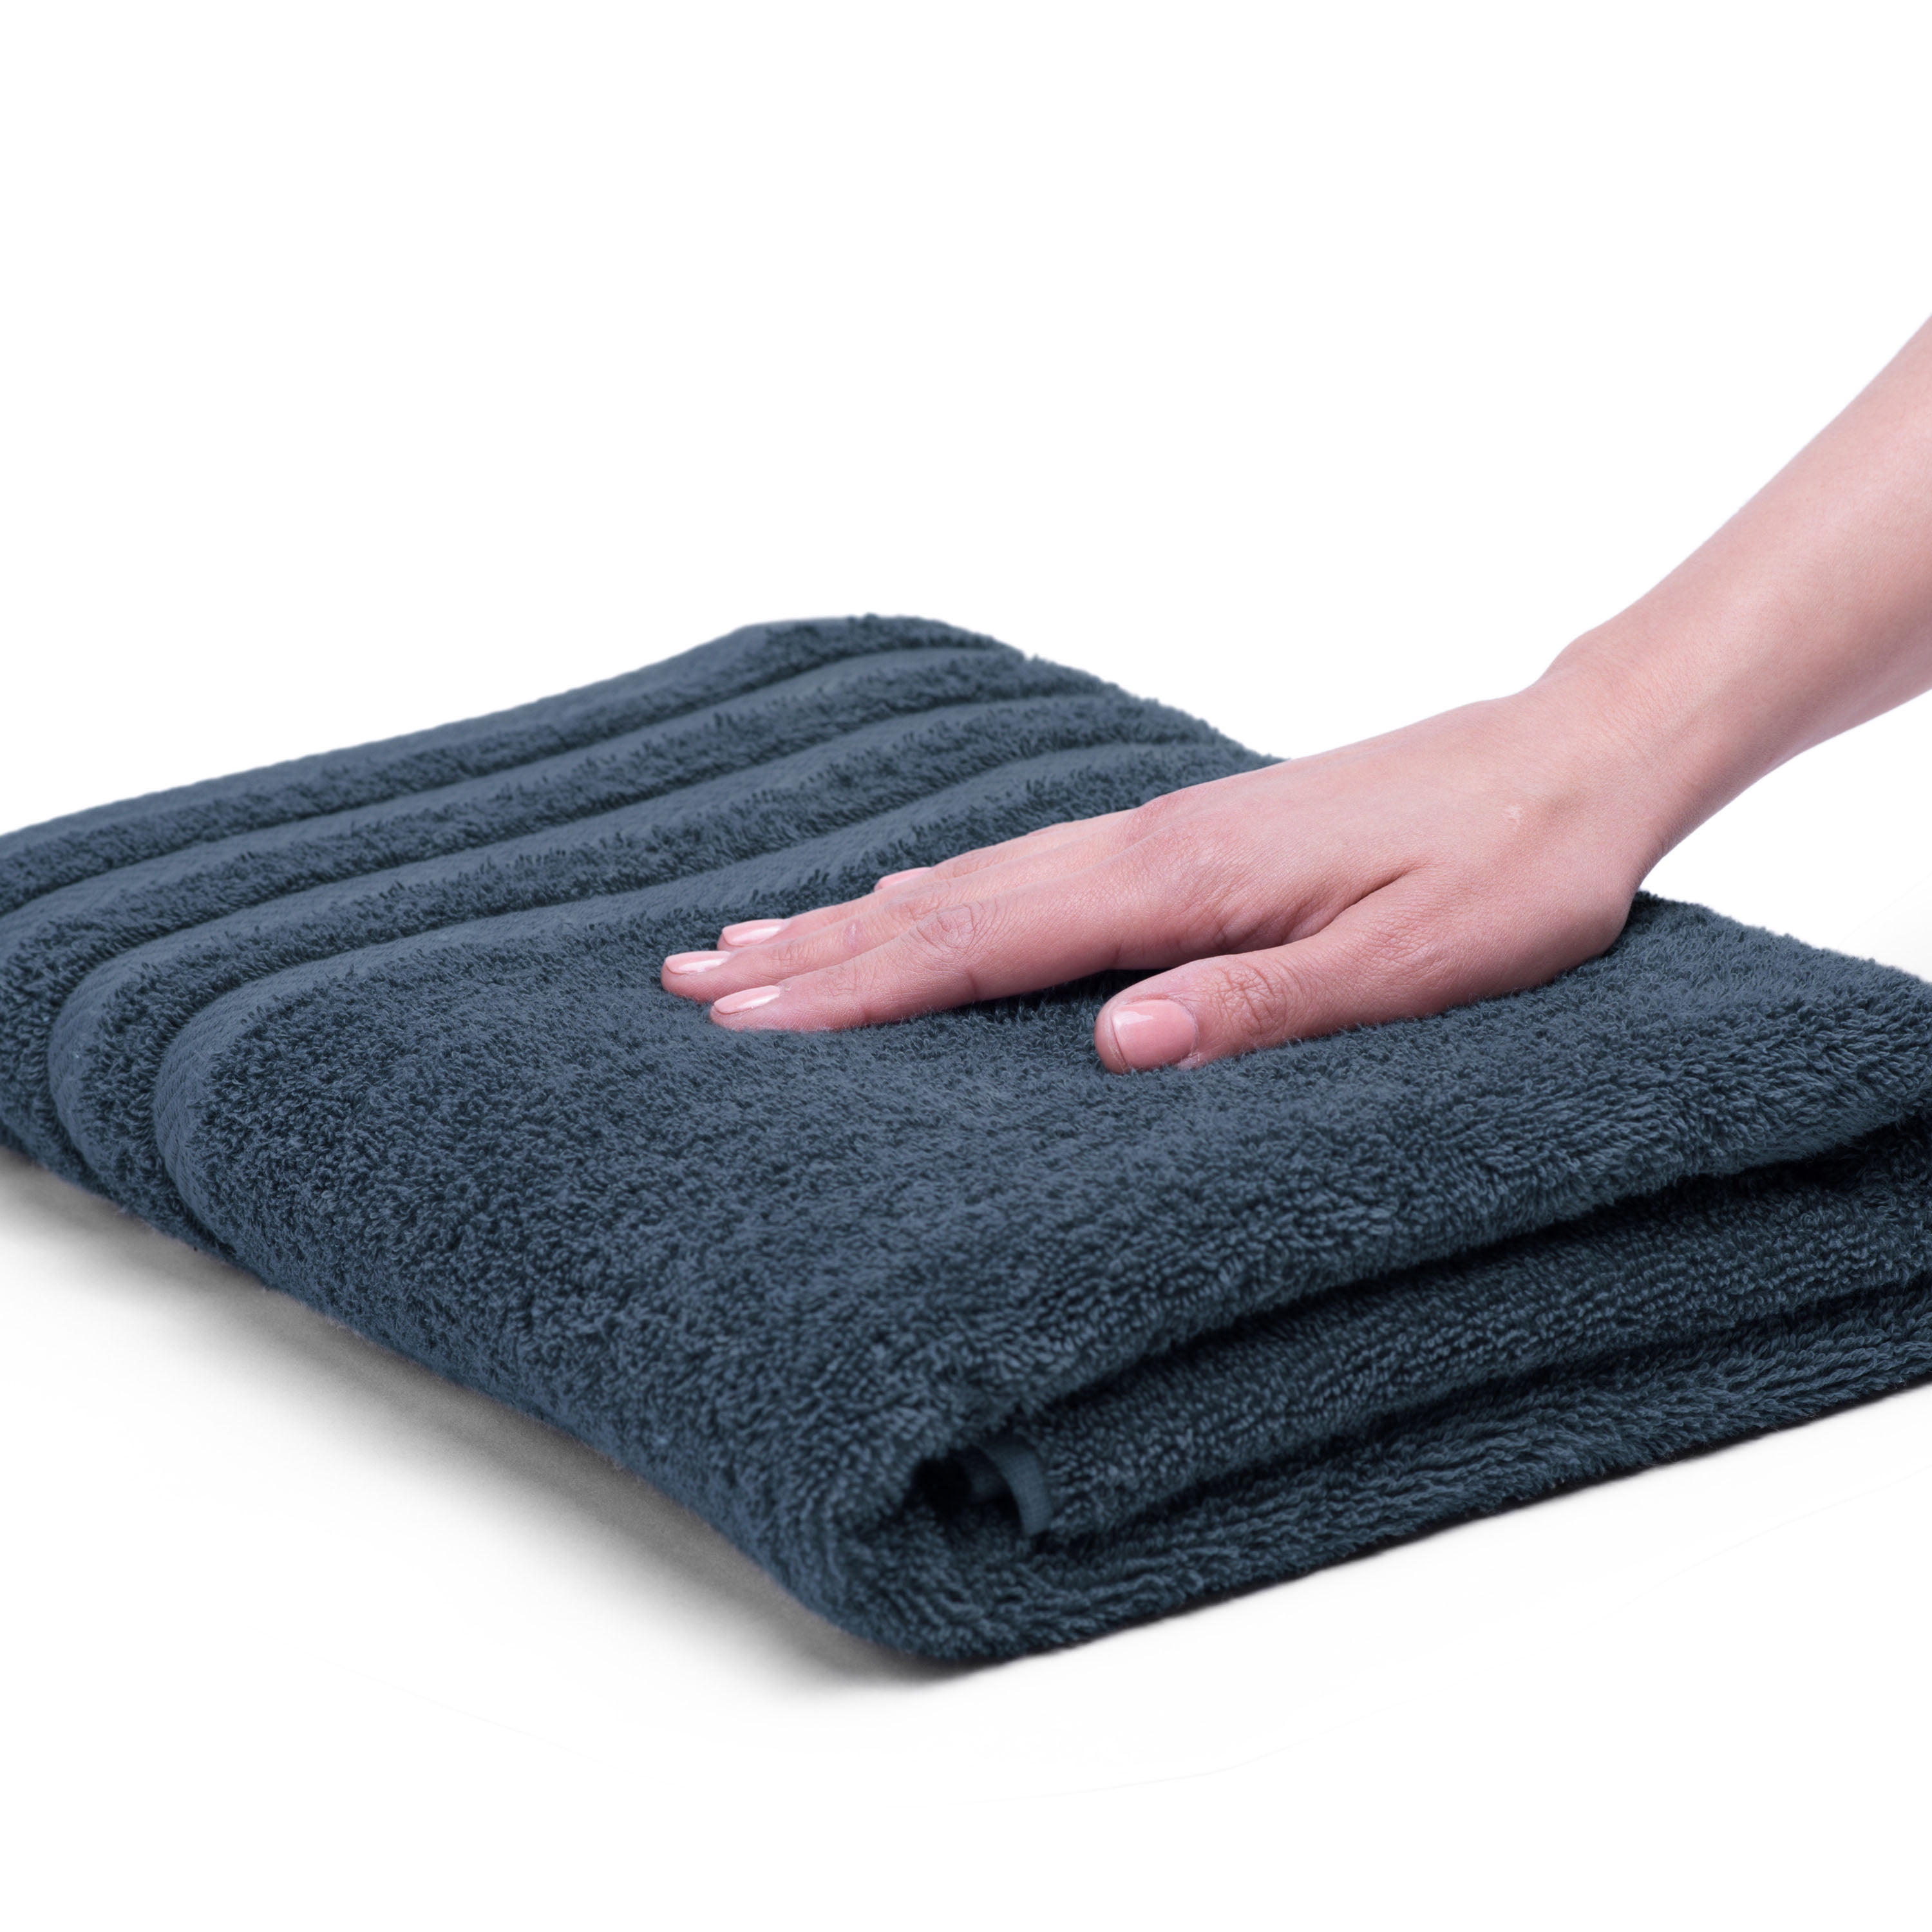 Martex Egyptian Cotton Dryfast Hand Towel-Sand